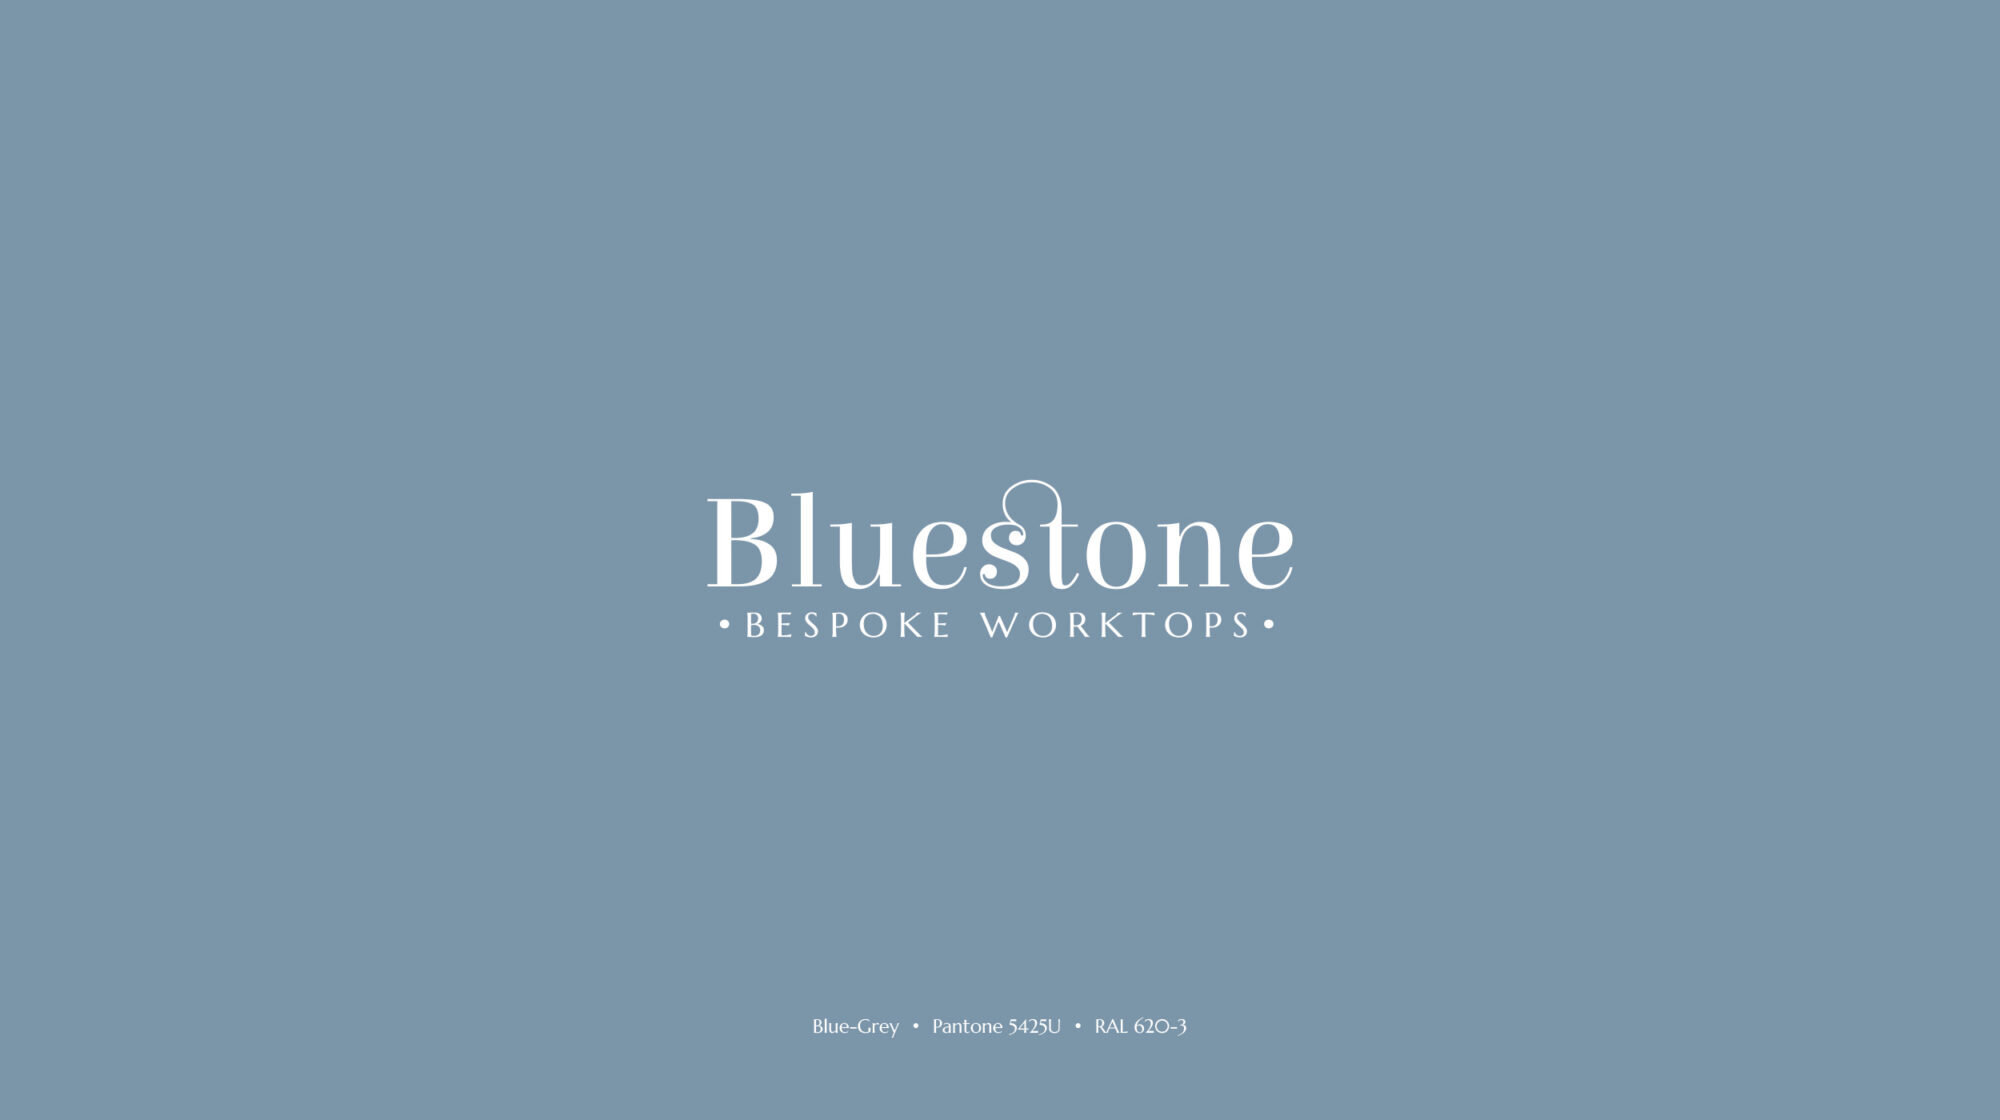 brand-strategy-design-bluestone-bespoke-worktops-the-brand-chap-1.jpeg